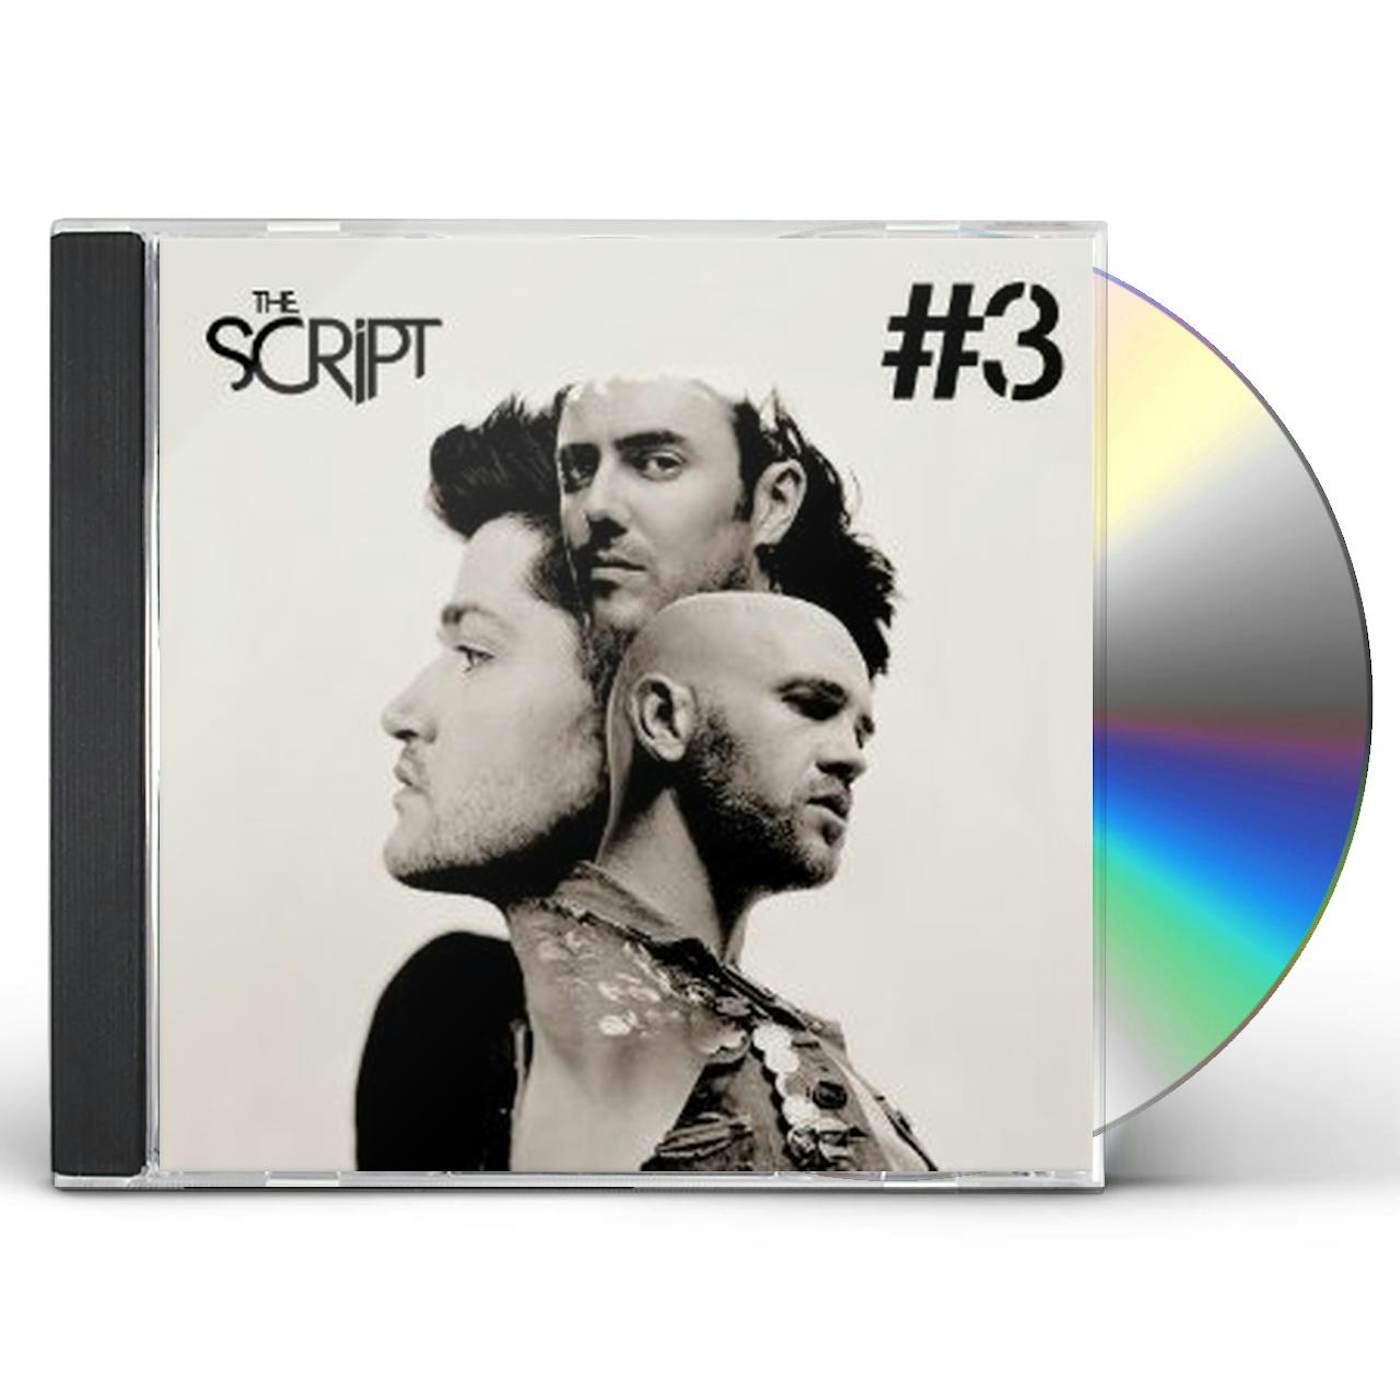 The Script 3 CD